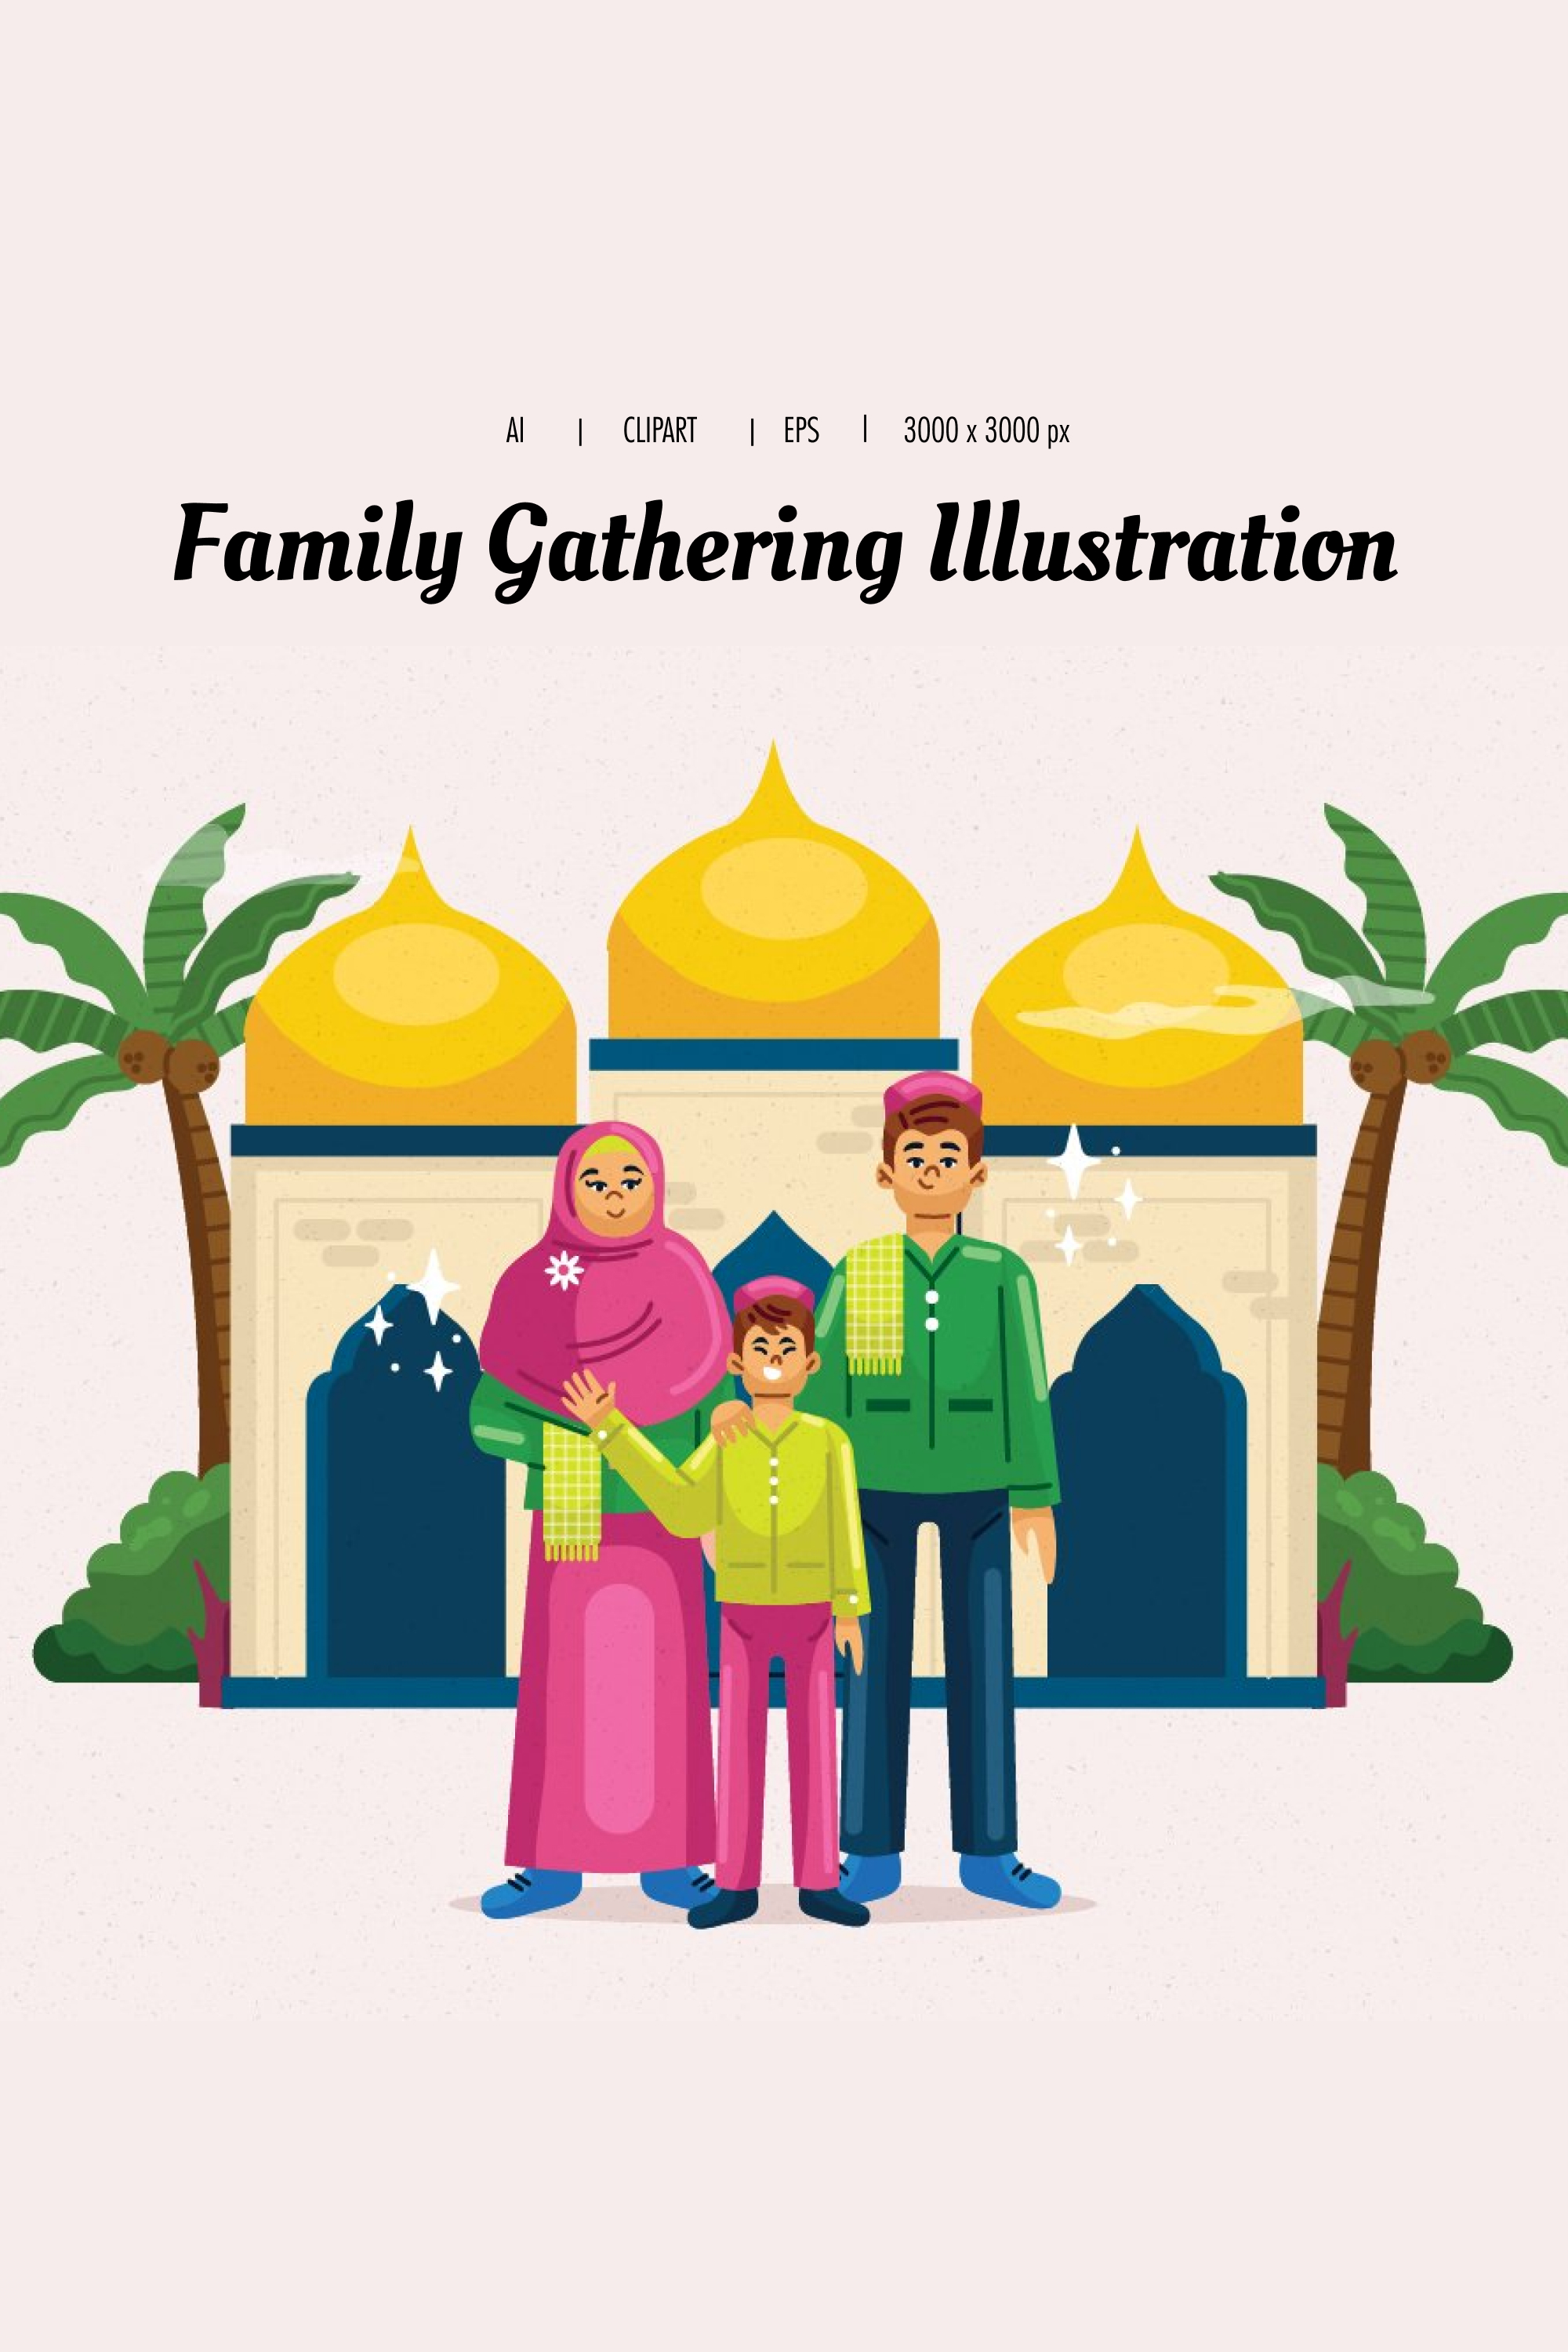 Family gathering illustration of pinterest.